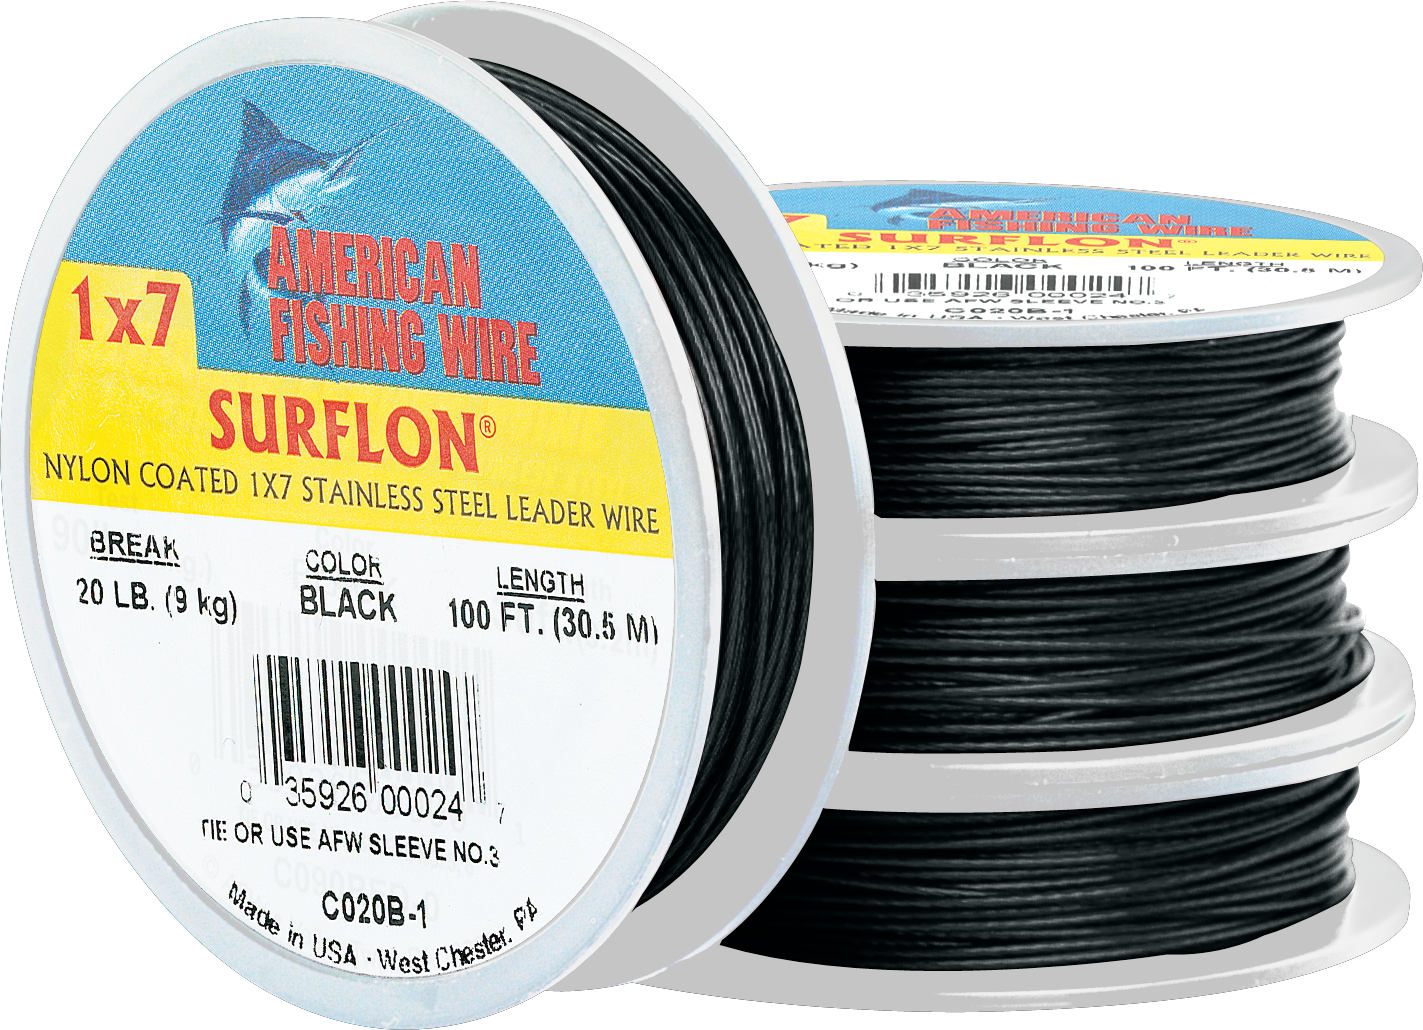 Abundant Flow Water Systems American Fishing Wire Surflon Nylon